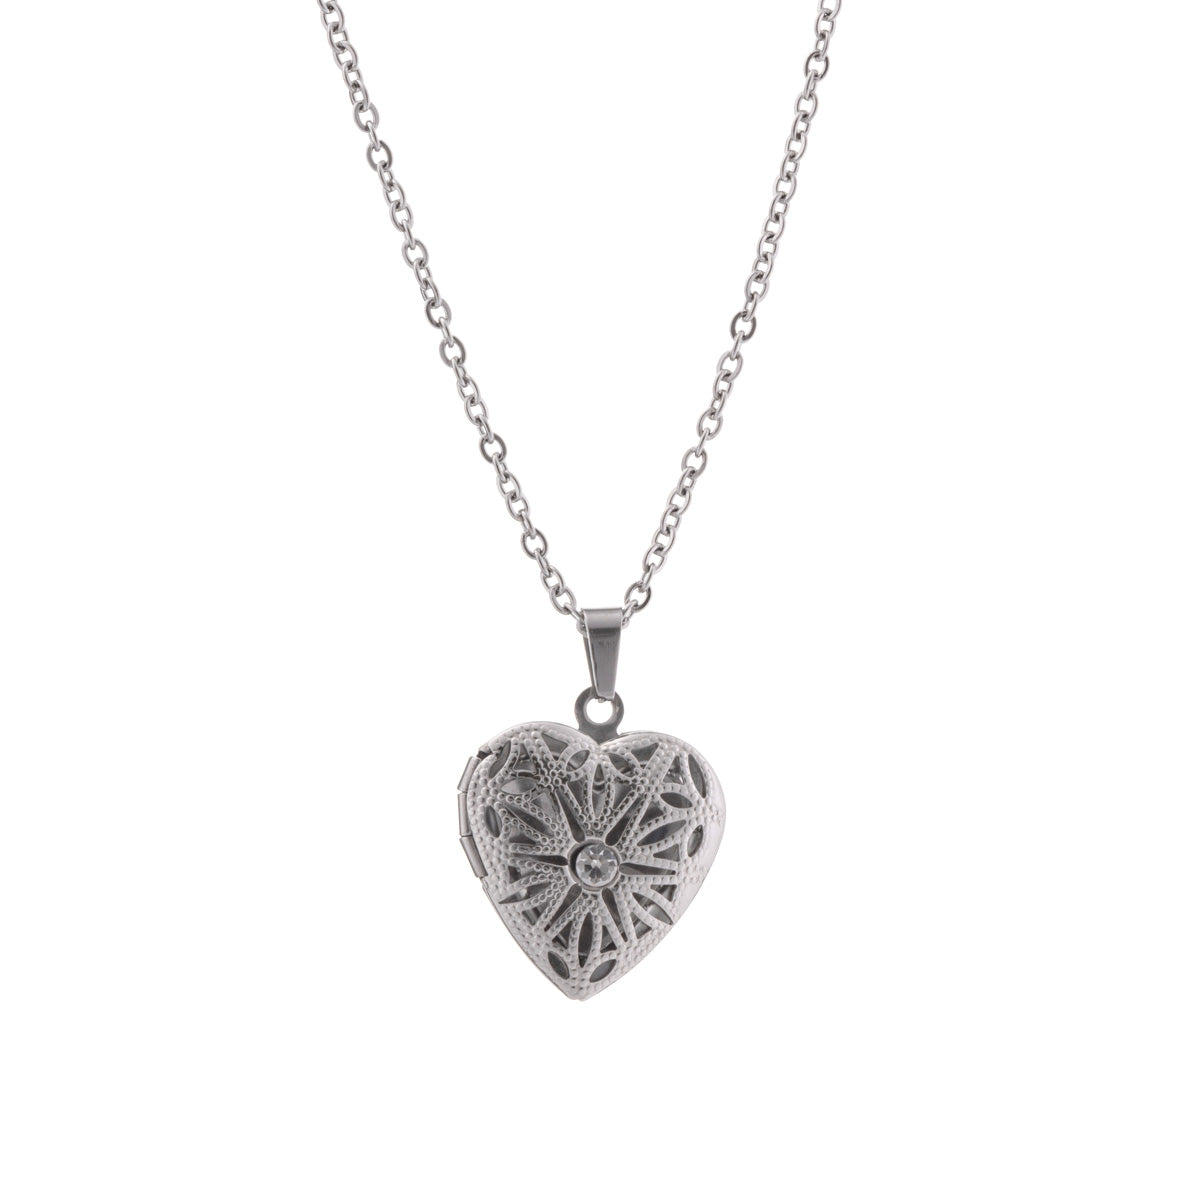 Steel heart pendant necklace